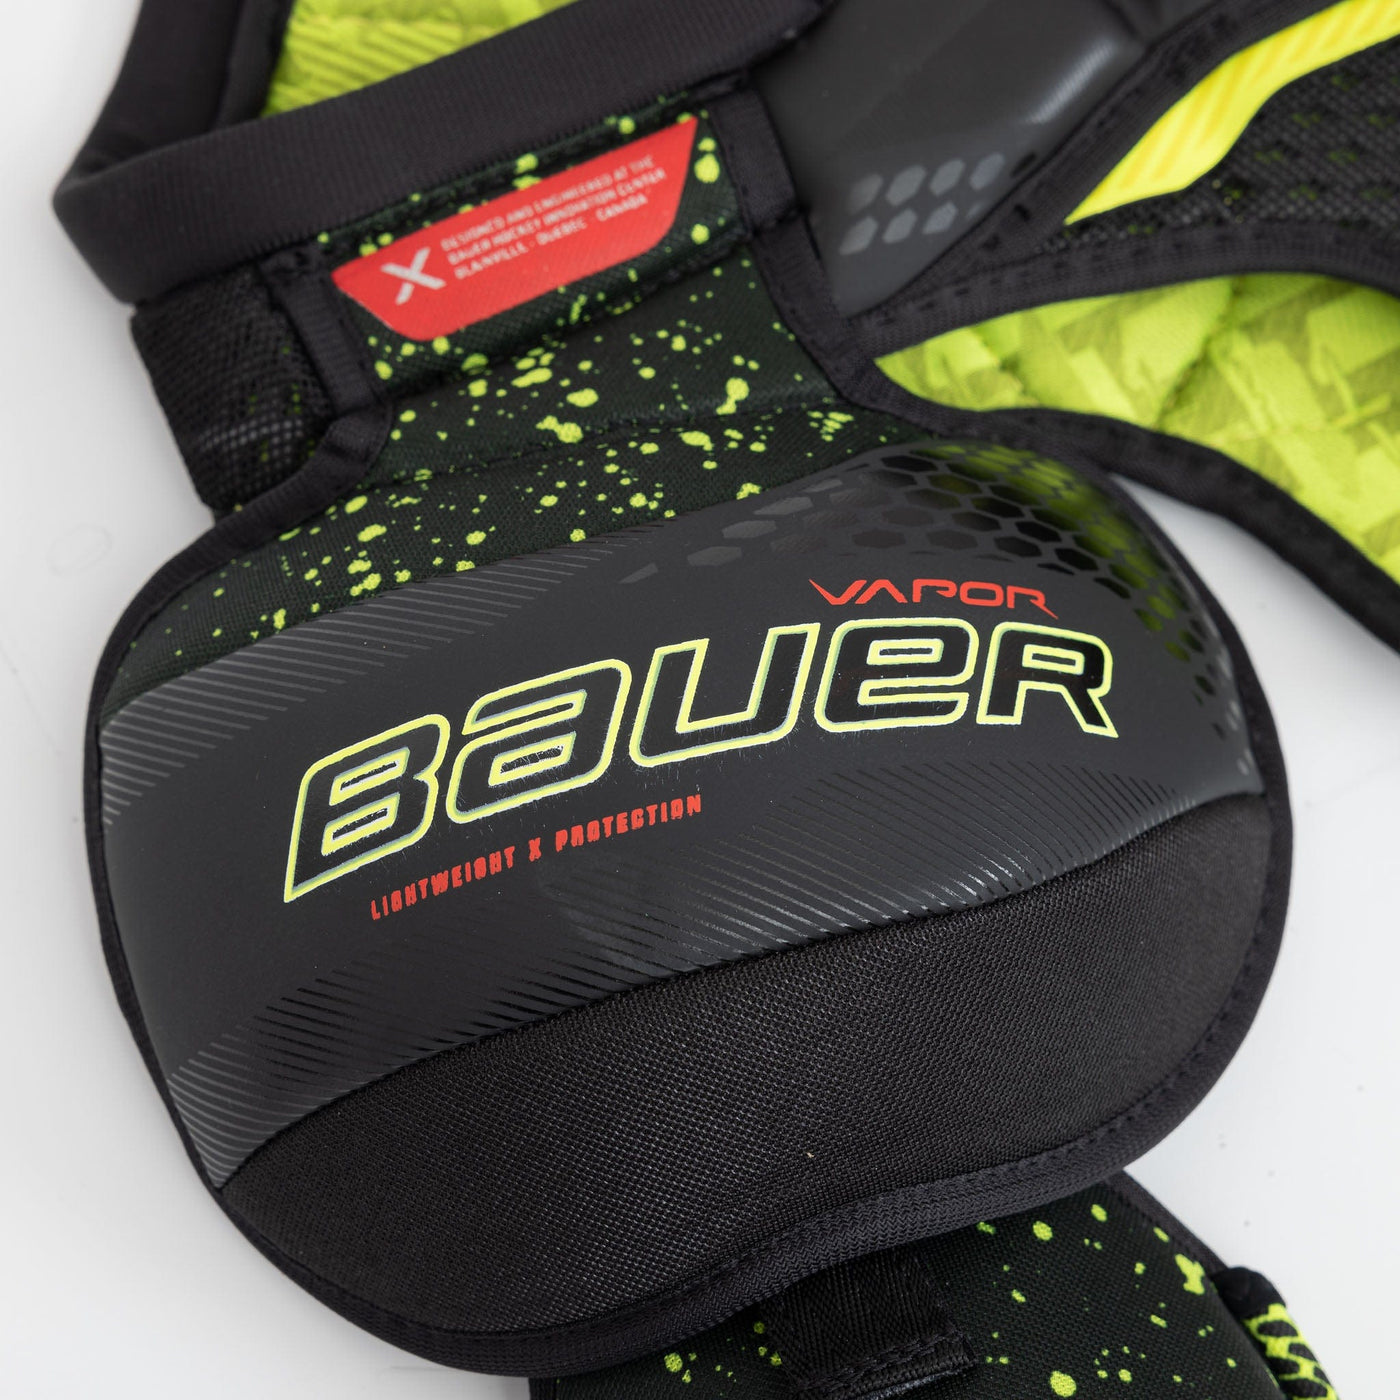 Bauer Vapor 3X Junior Hockey Shoulder Pads - The Hockey Shop Source For Sports